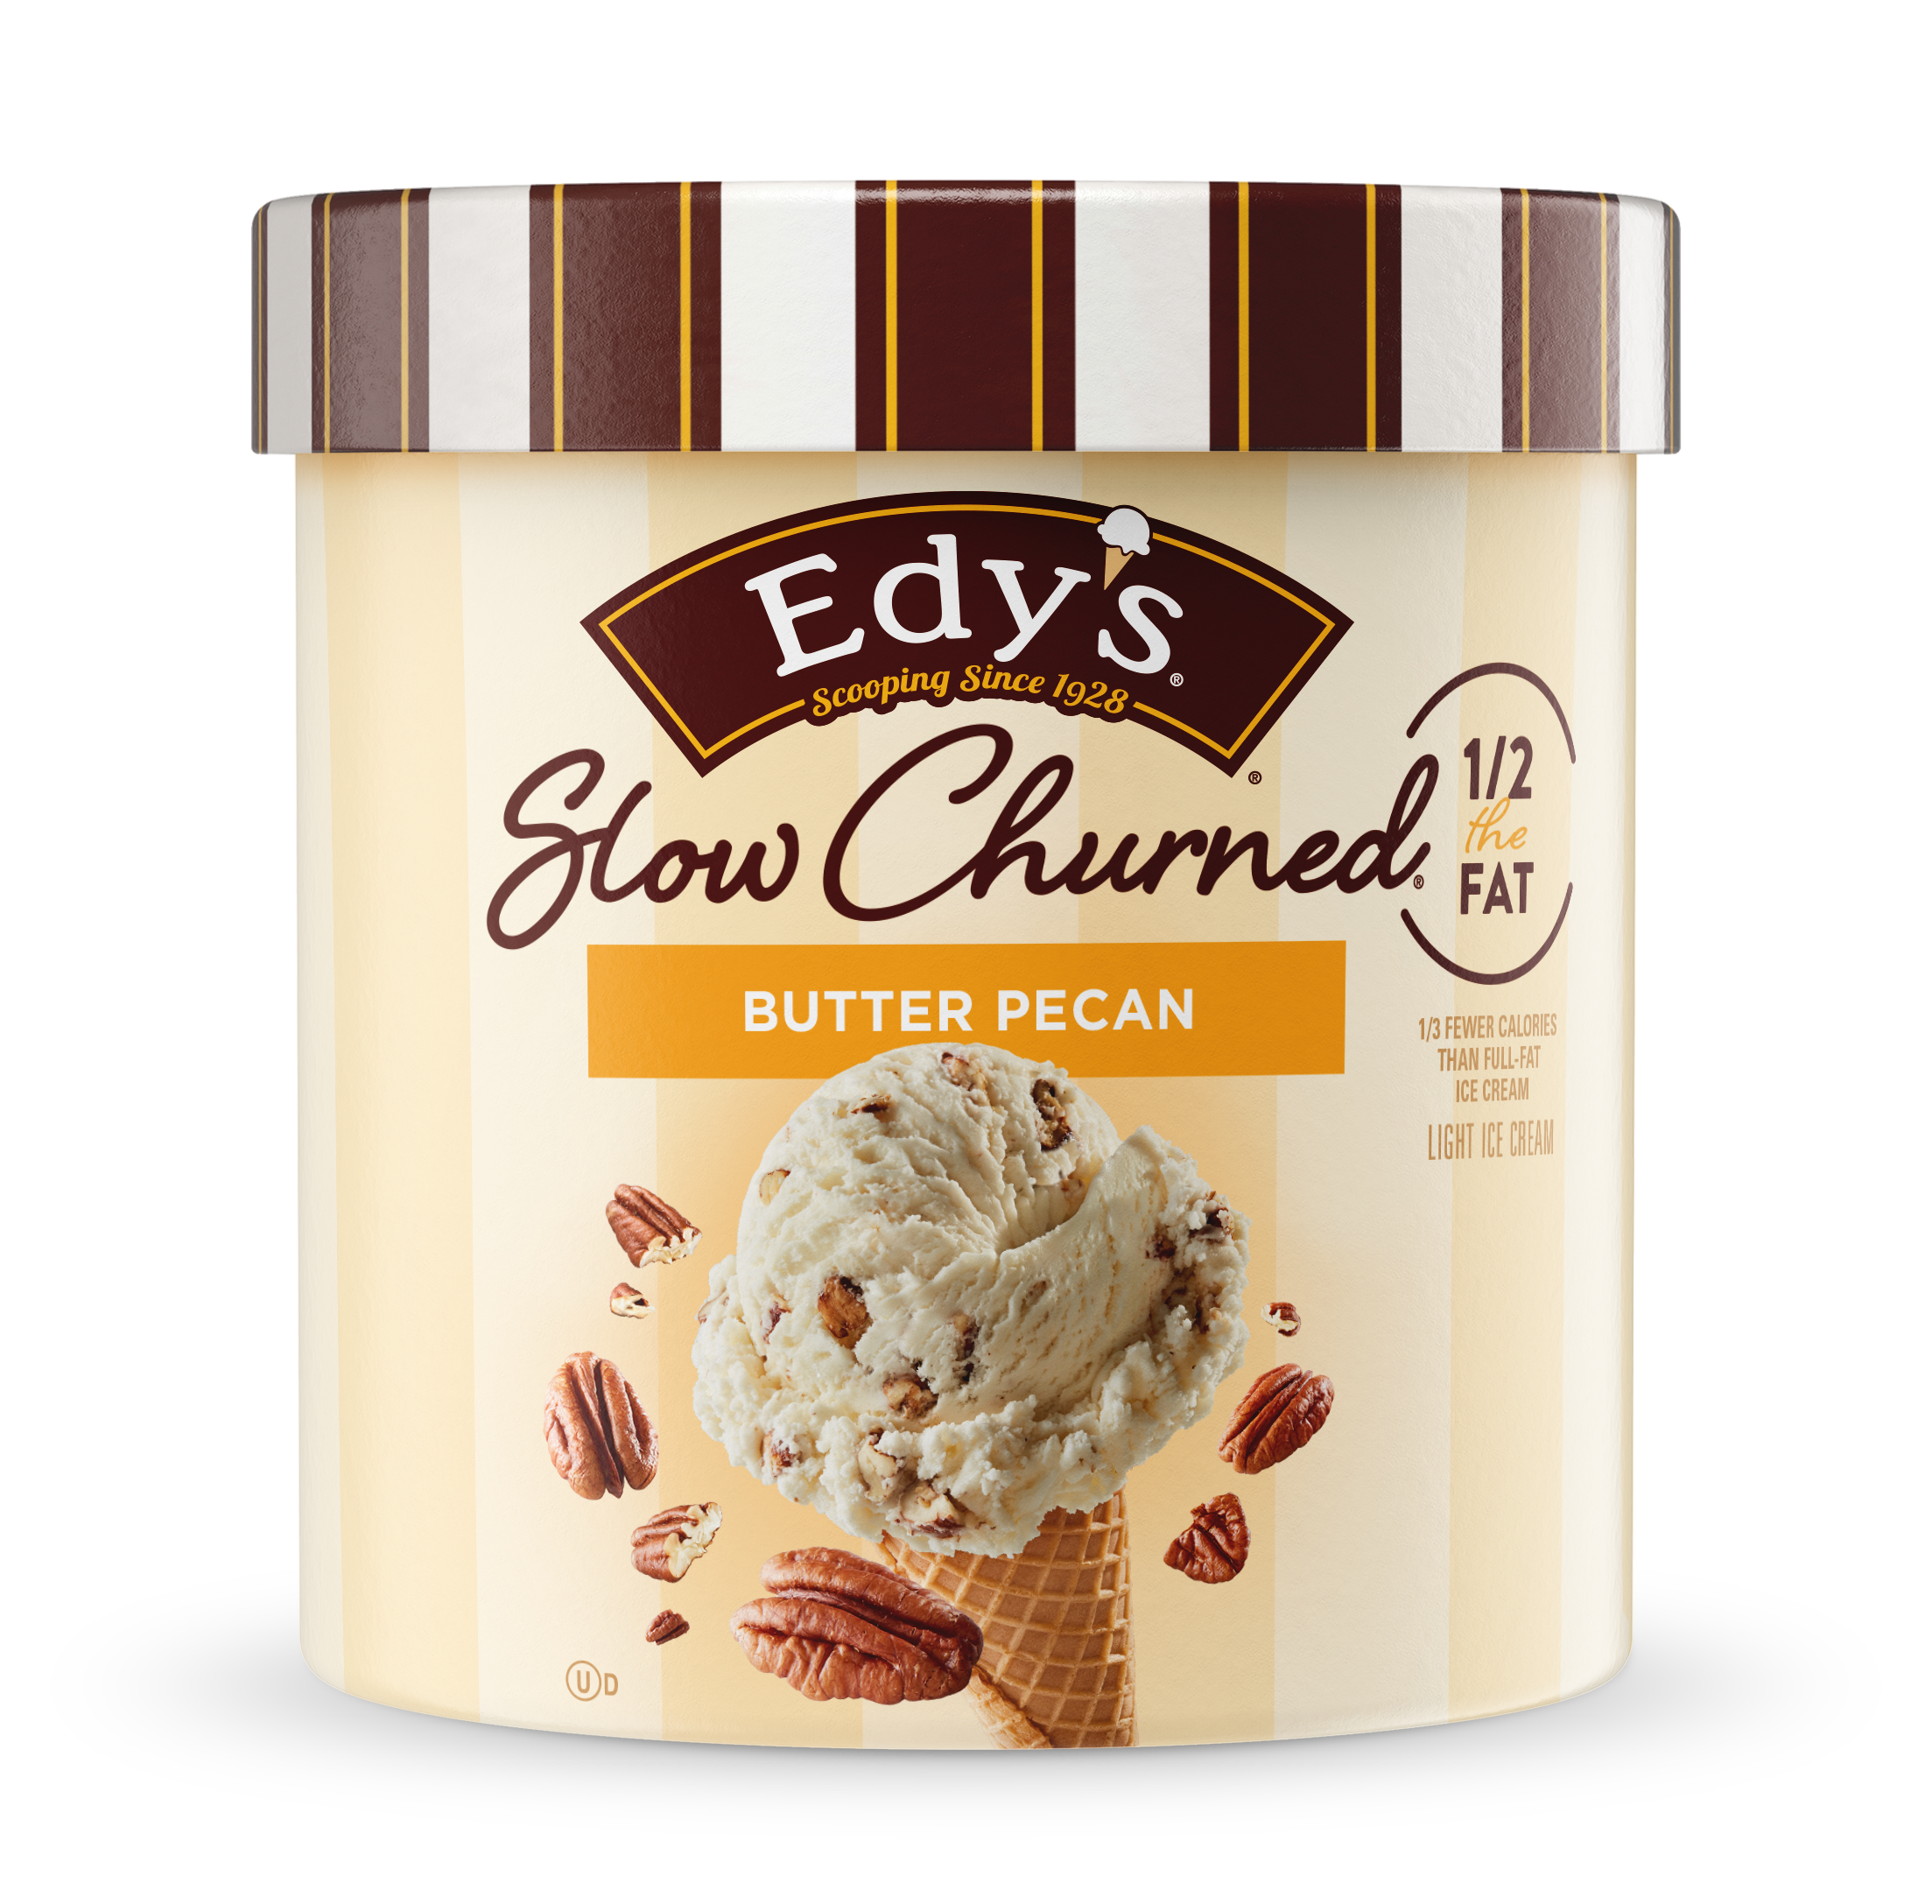 Carton of Edy's slow-churned Butter Pecan ice cream